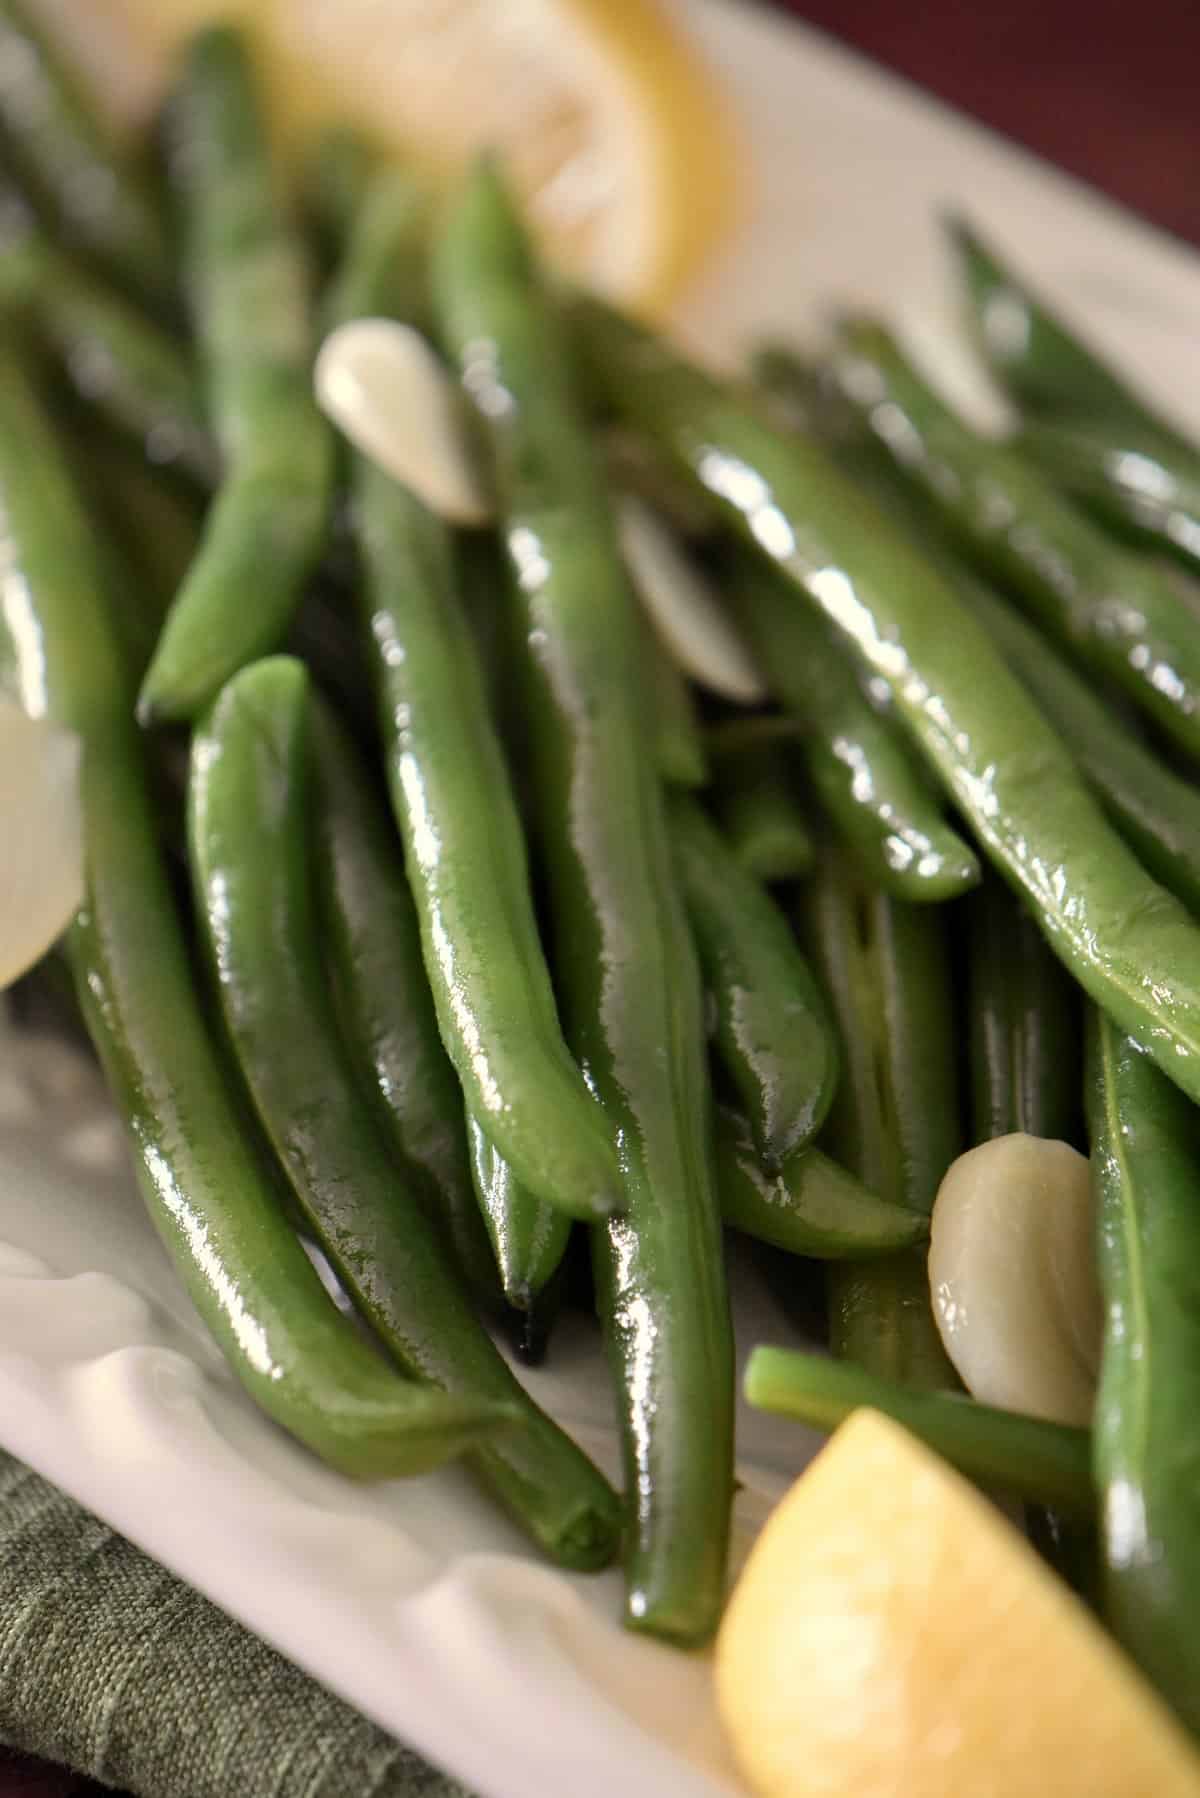 https://www.shelovesbiscotti.com/wp-content/uploads/2016/08/Steamed-Green-Beans-1.jpg